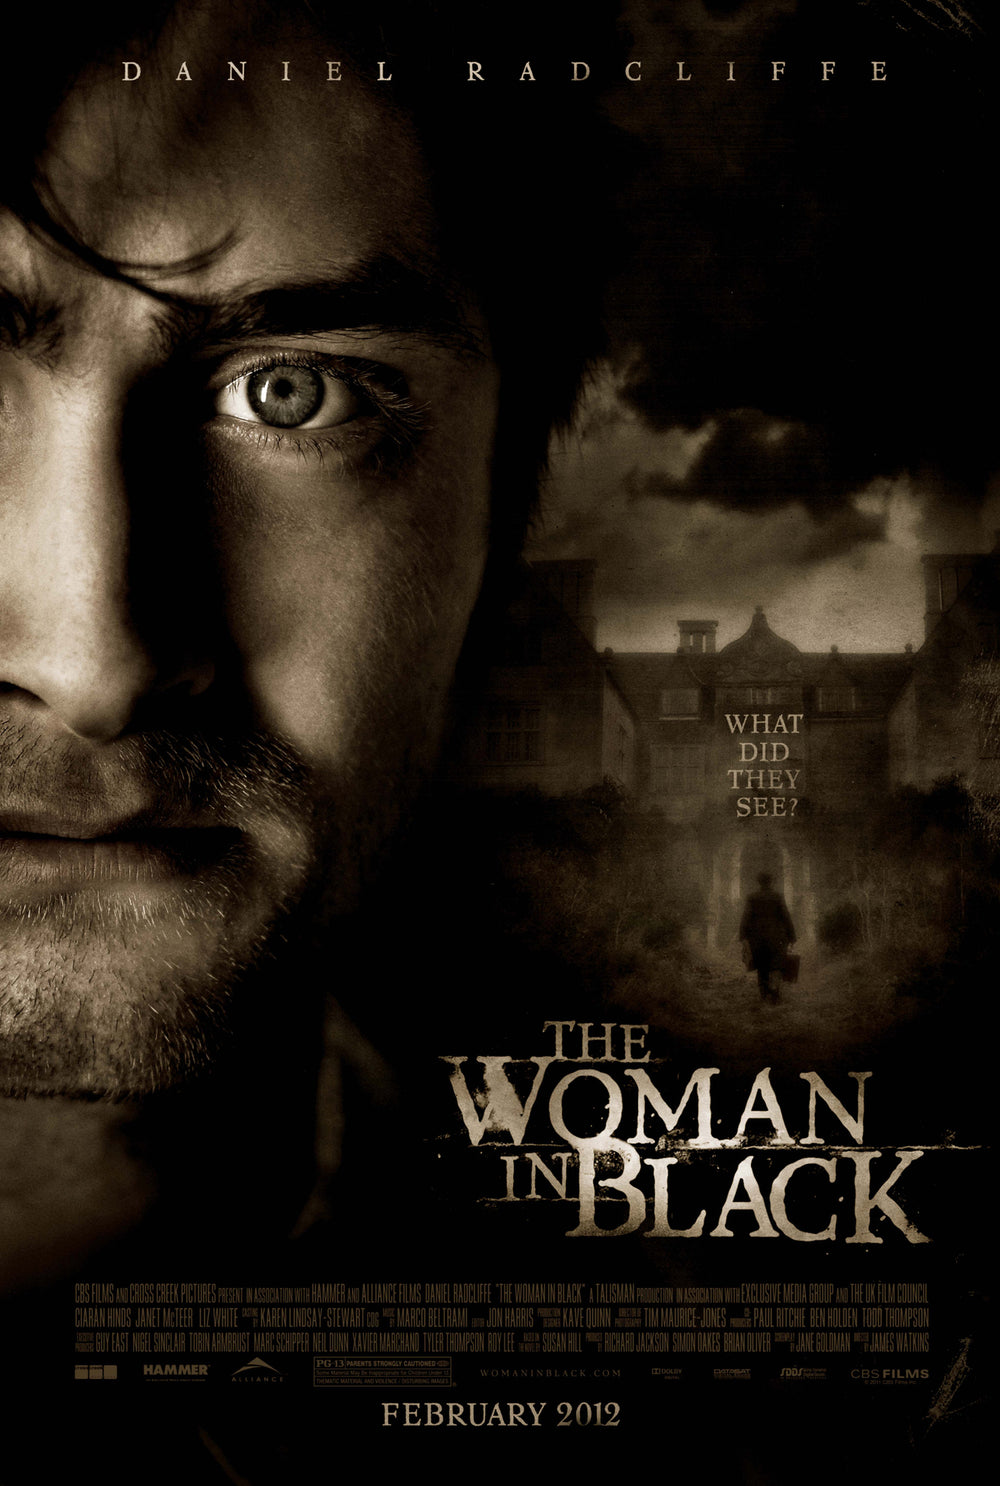 THE WOMAN IN BLACK HD VUDU/iTunes VIA Moviesanywhere